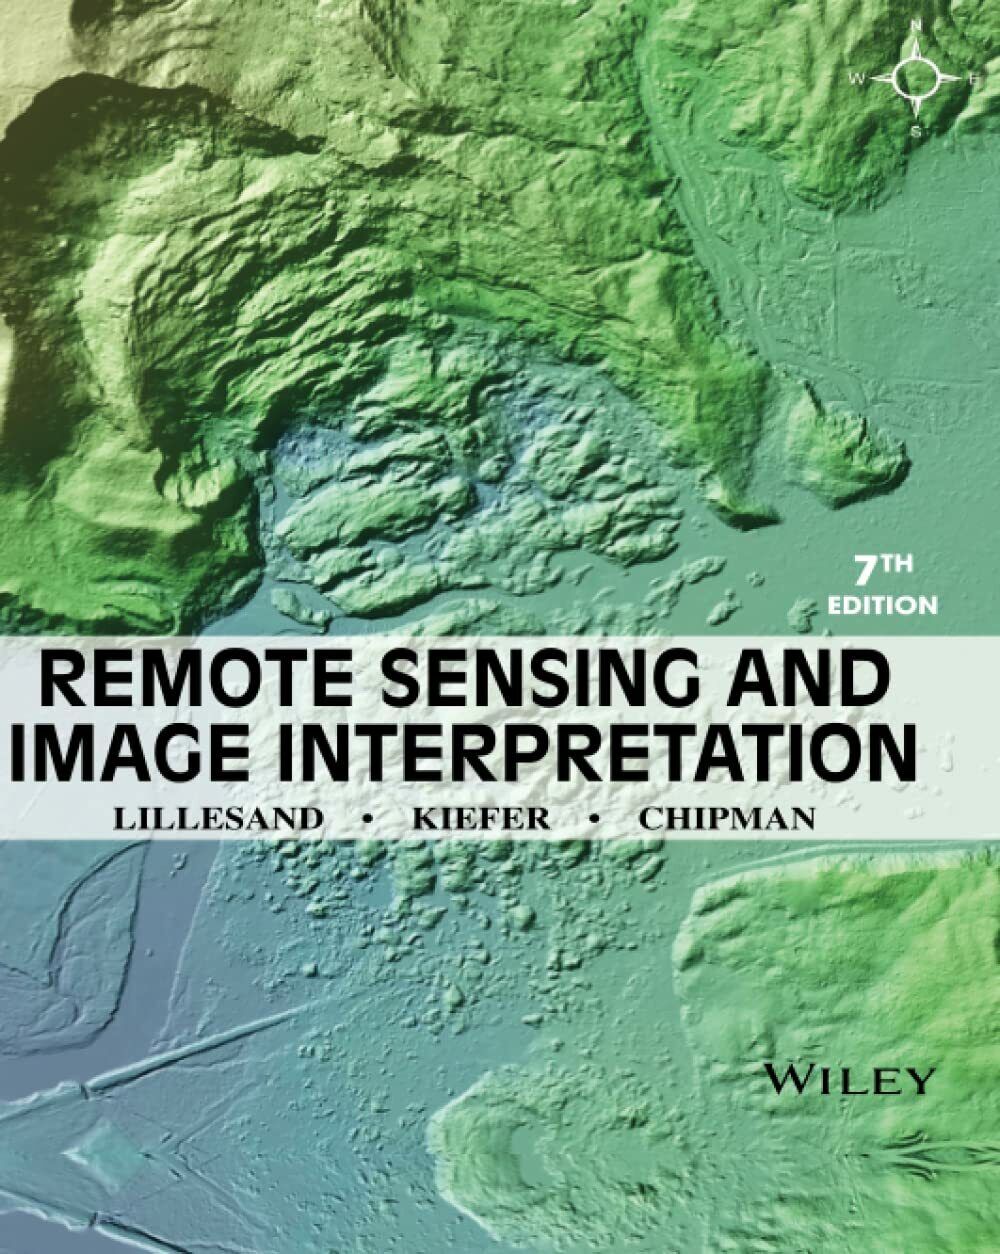 Remote Sensing and Image Interpretation - Wiley John + Sons - 2015